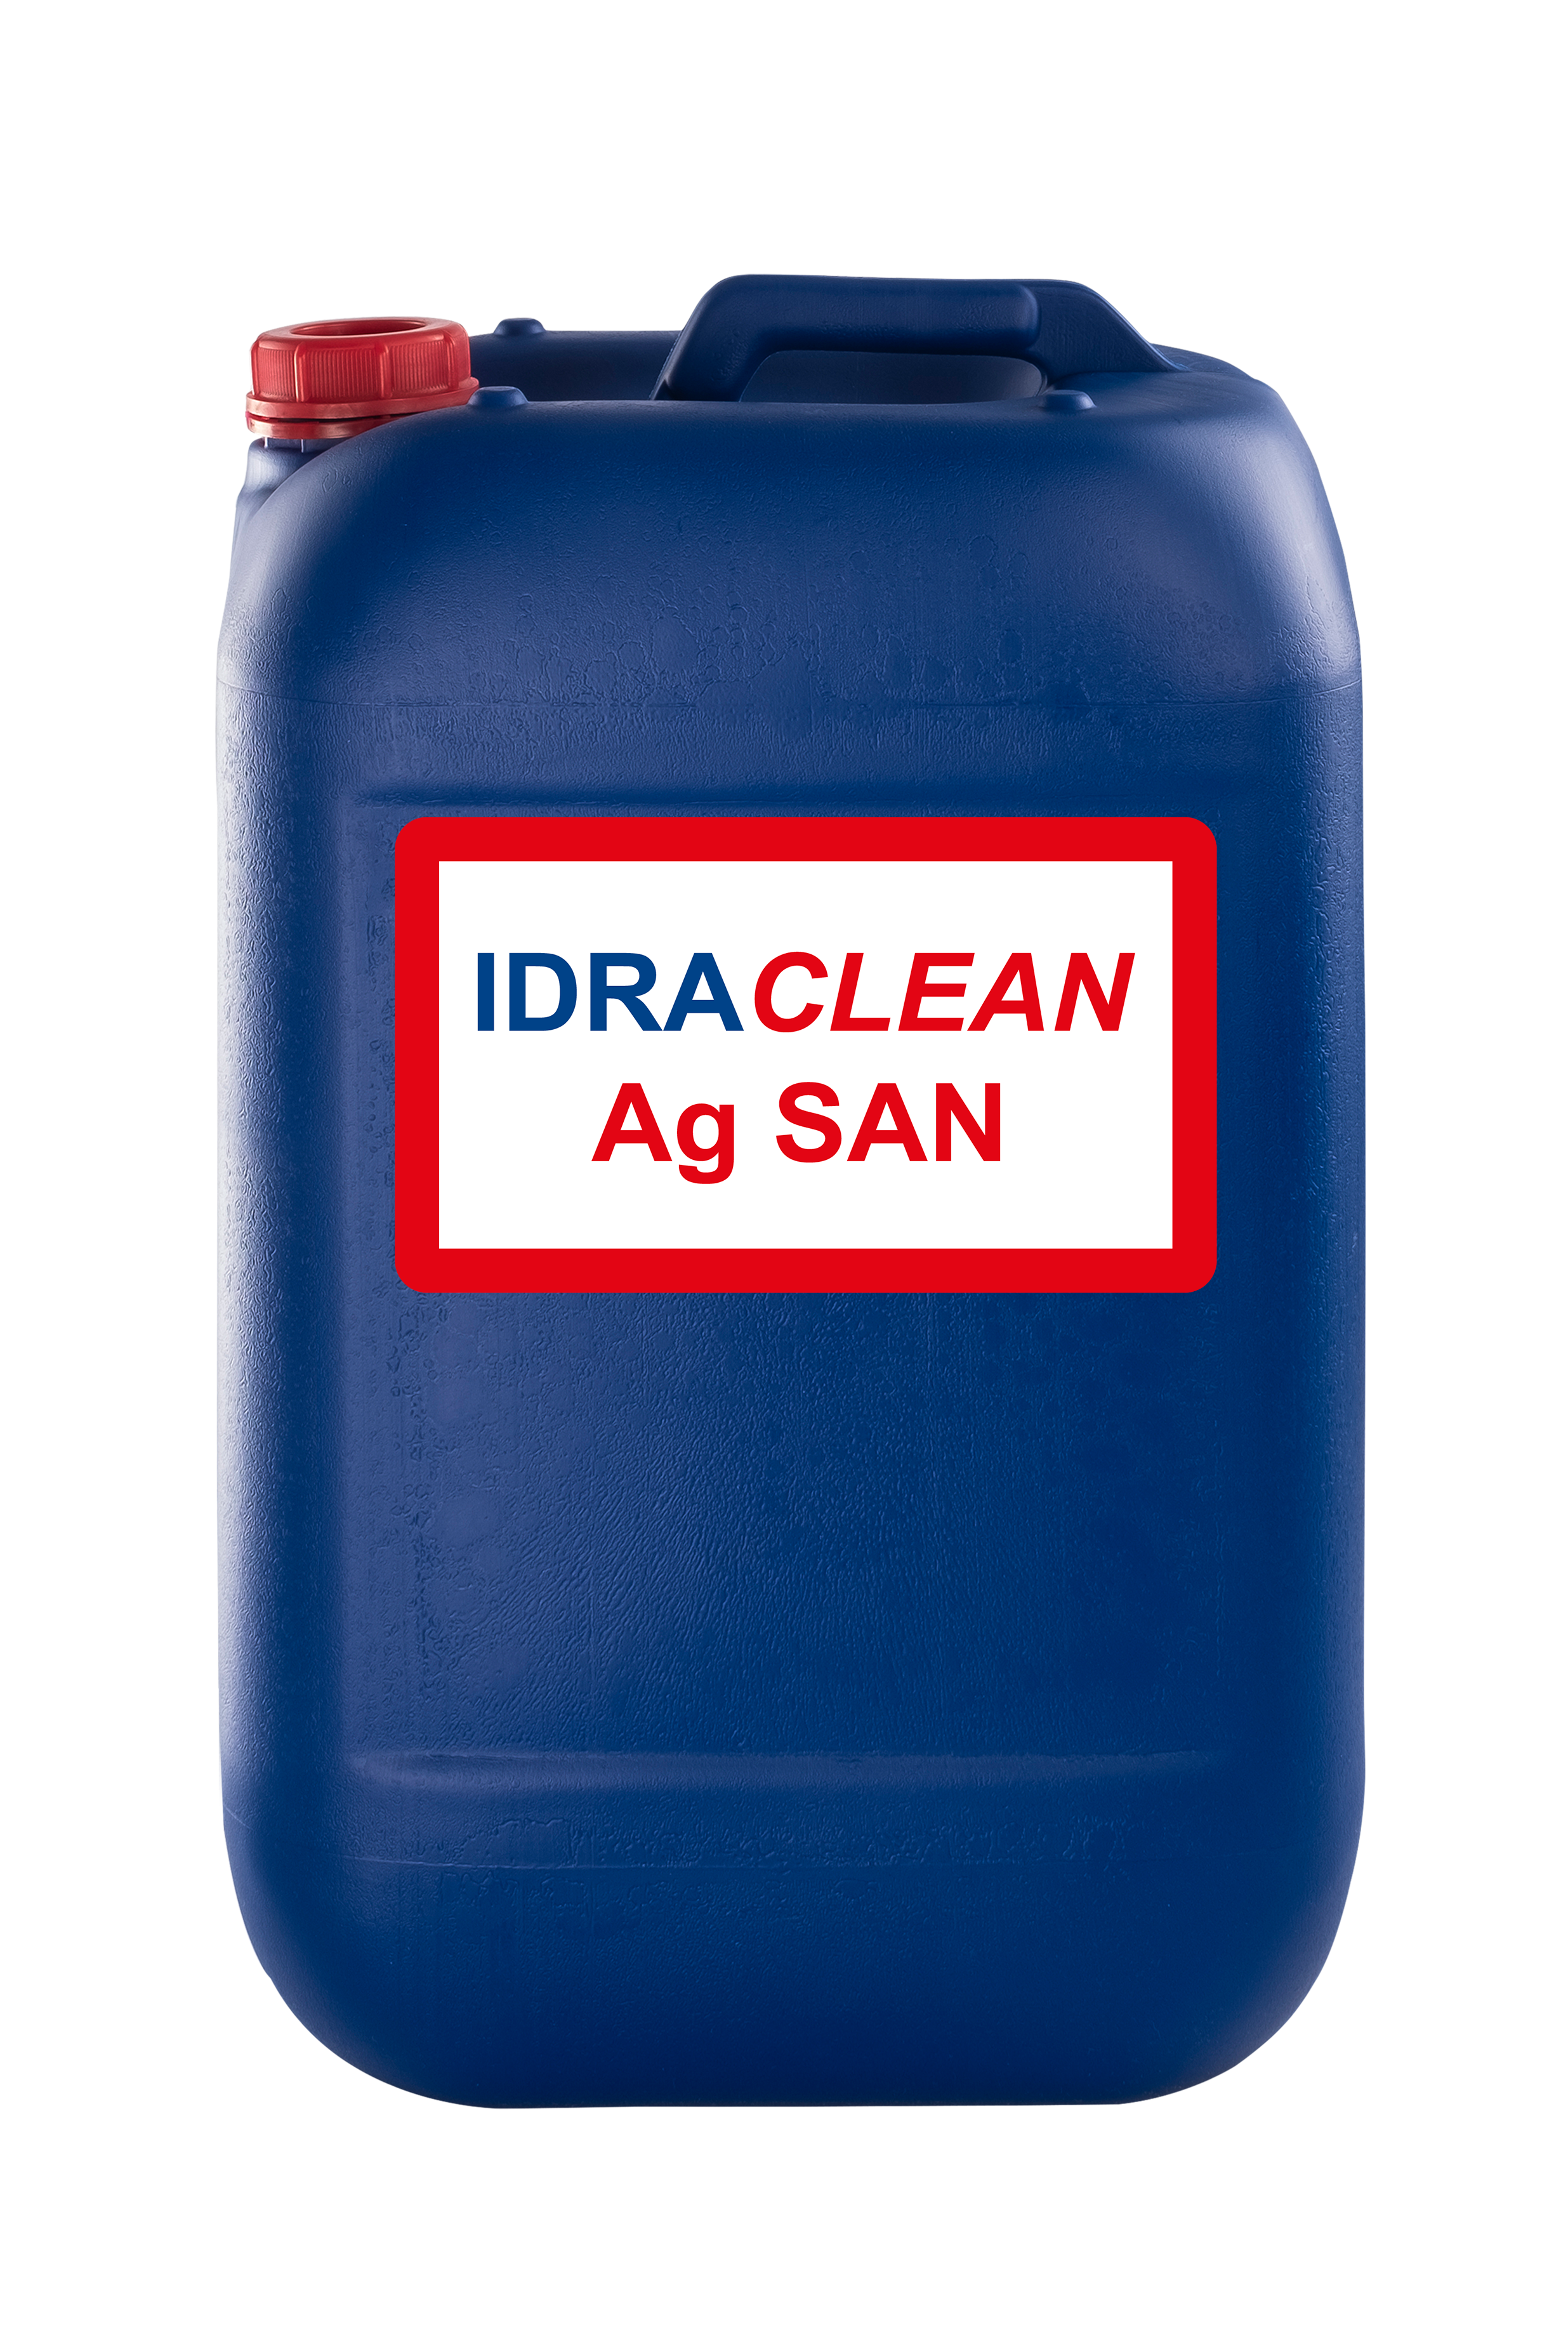 Idraclean AG SAN